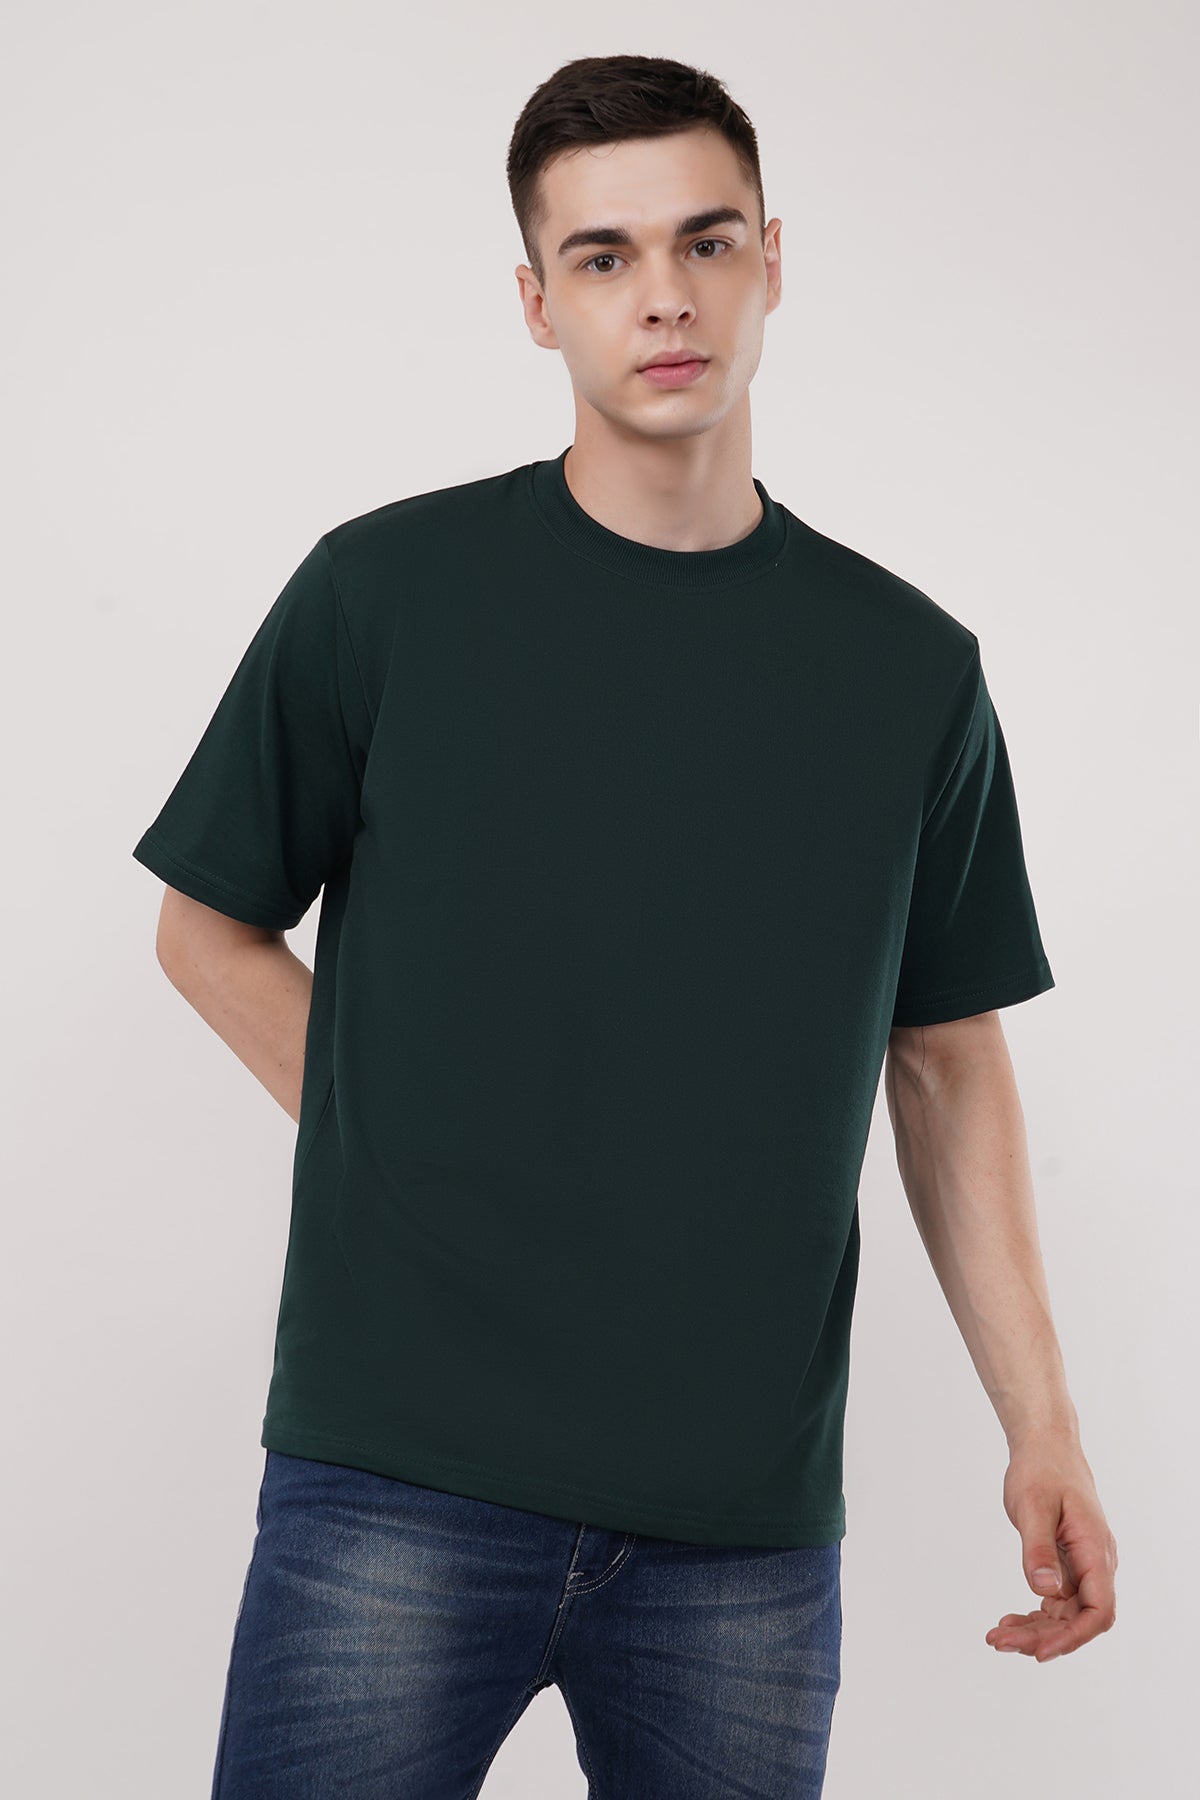 Outer Space Roundneck Half Sleeve Oversized T-Shirt By ColourJoyLondon